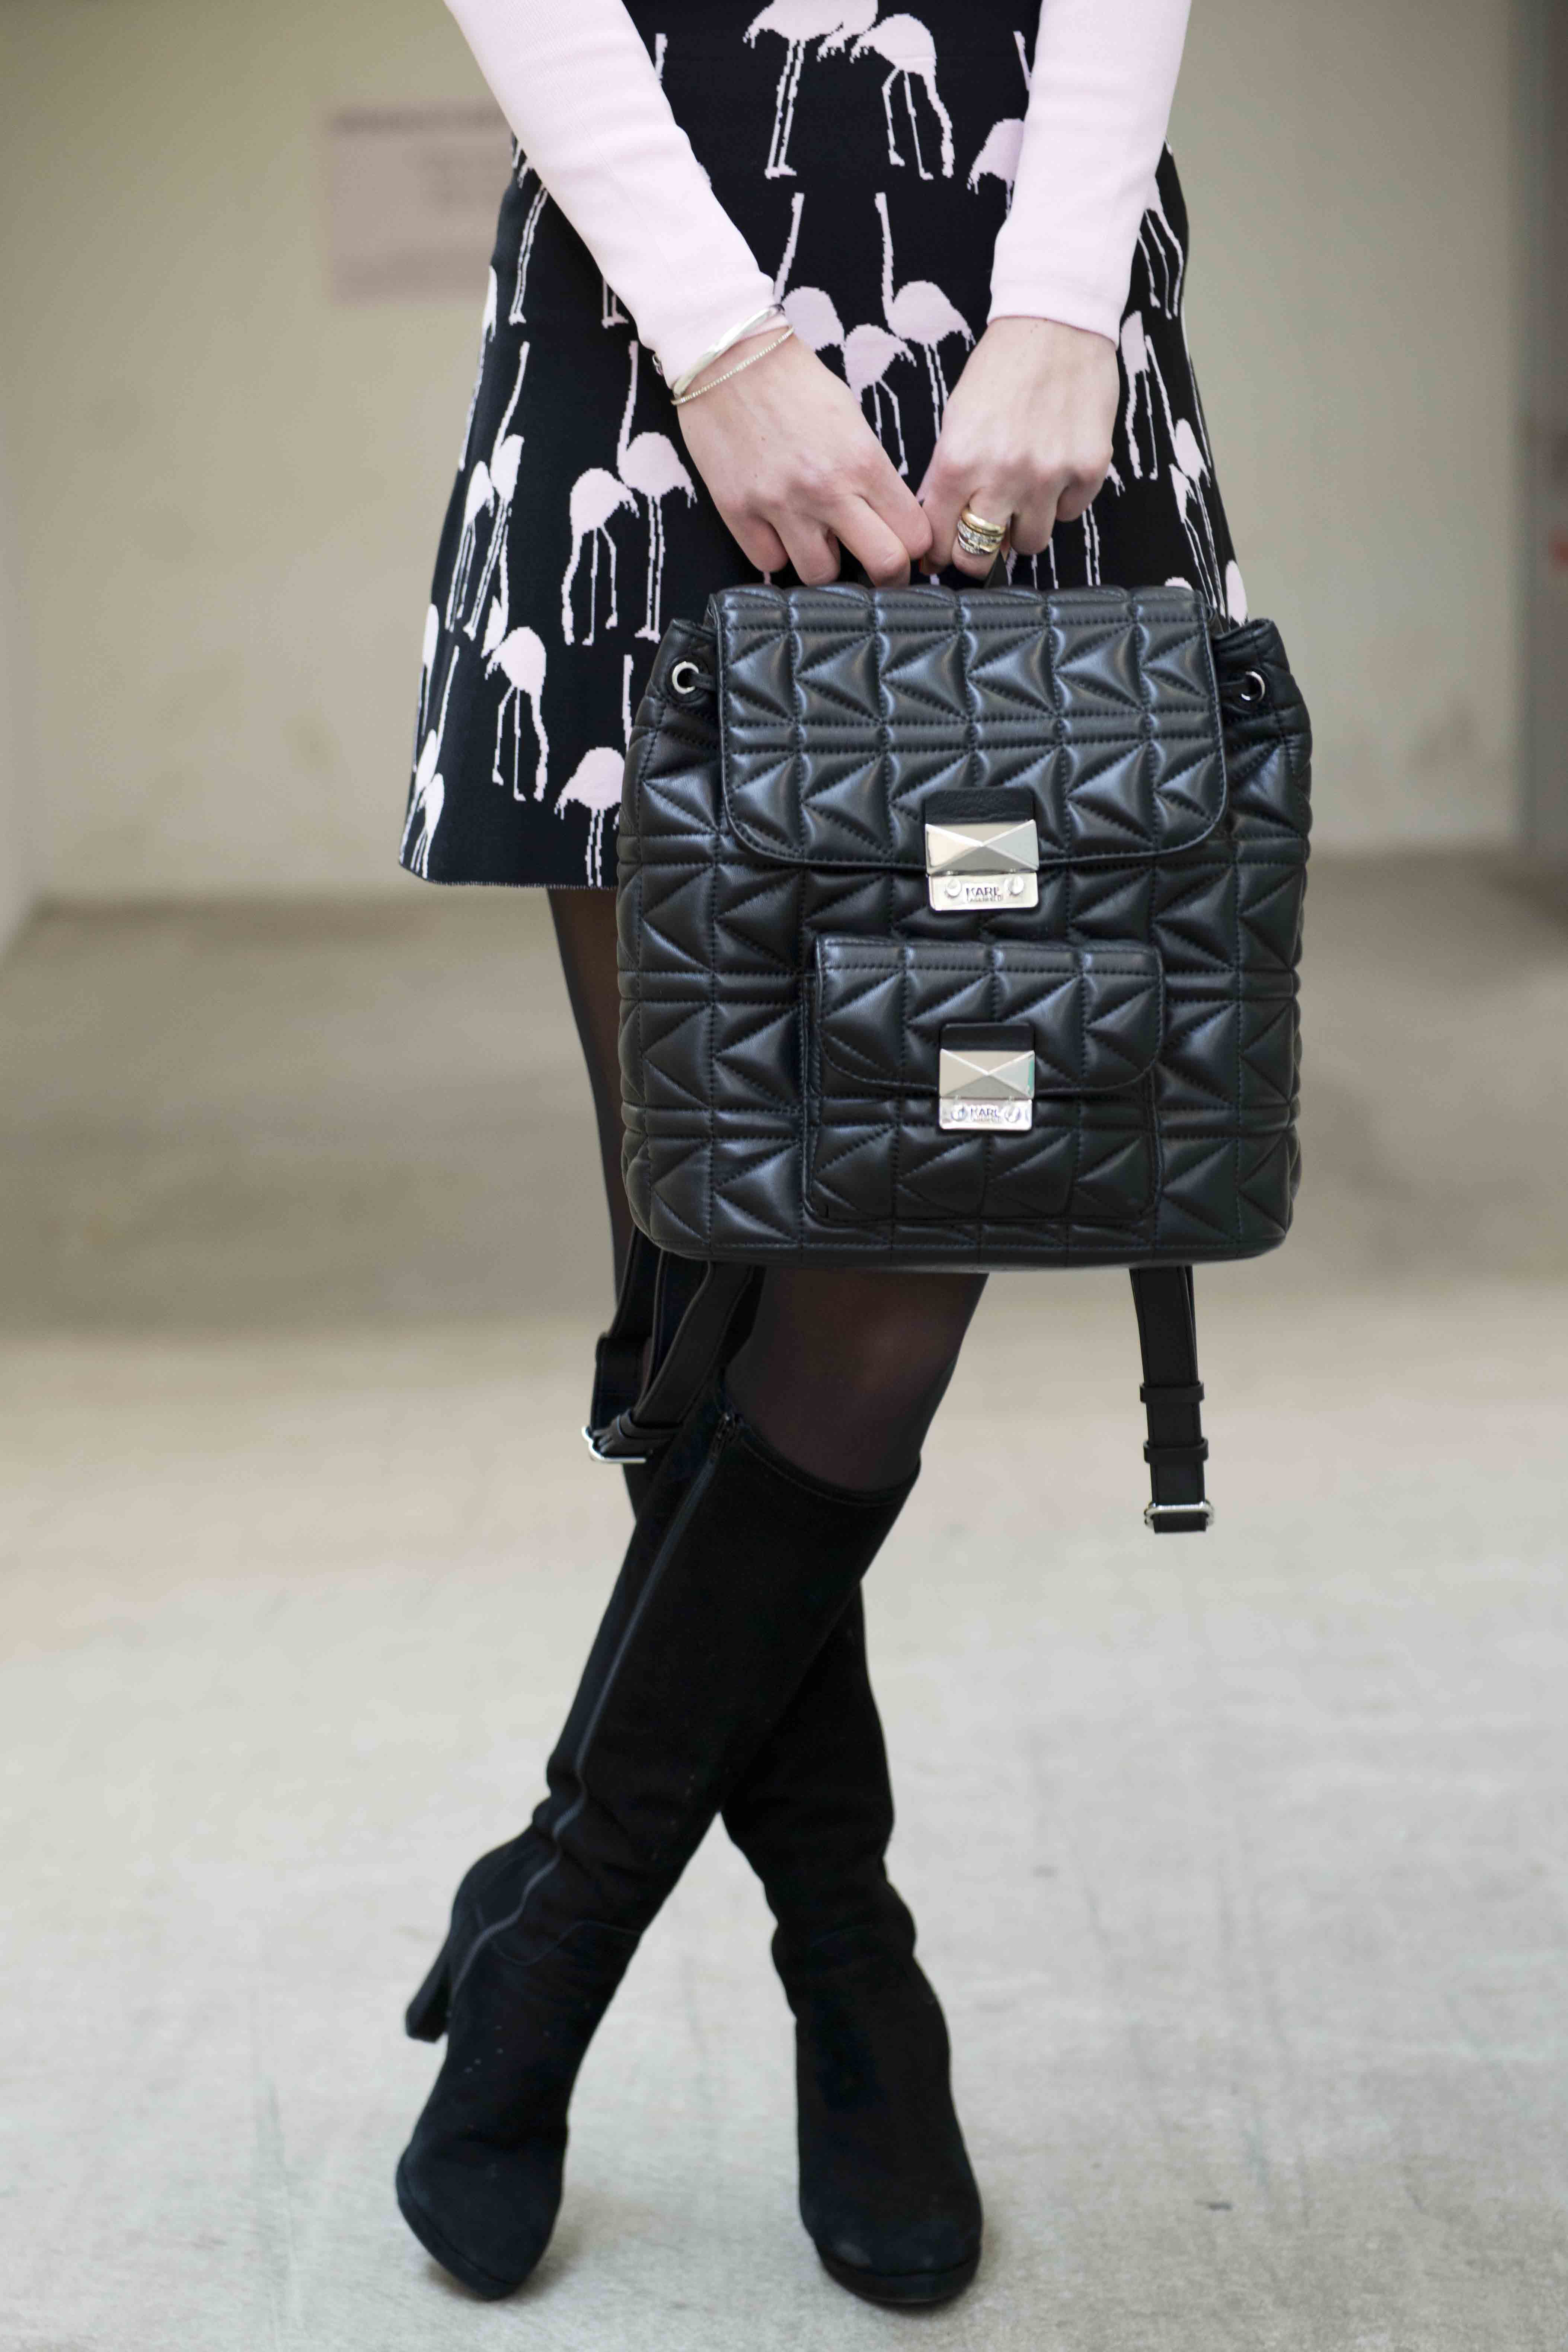 Bag at You - Fashion Blog - Stylish Feminine Backpack Karl Lagerfeld ...